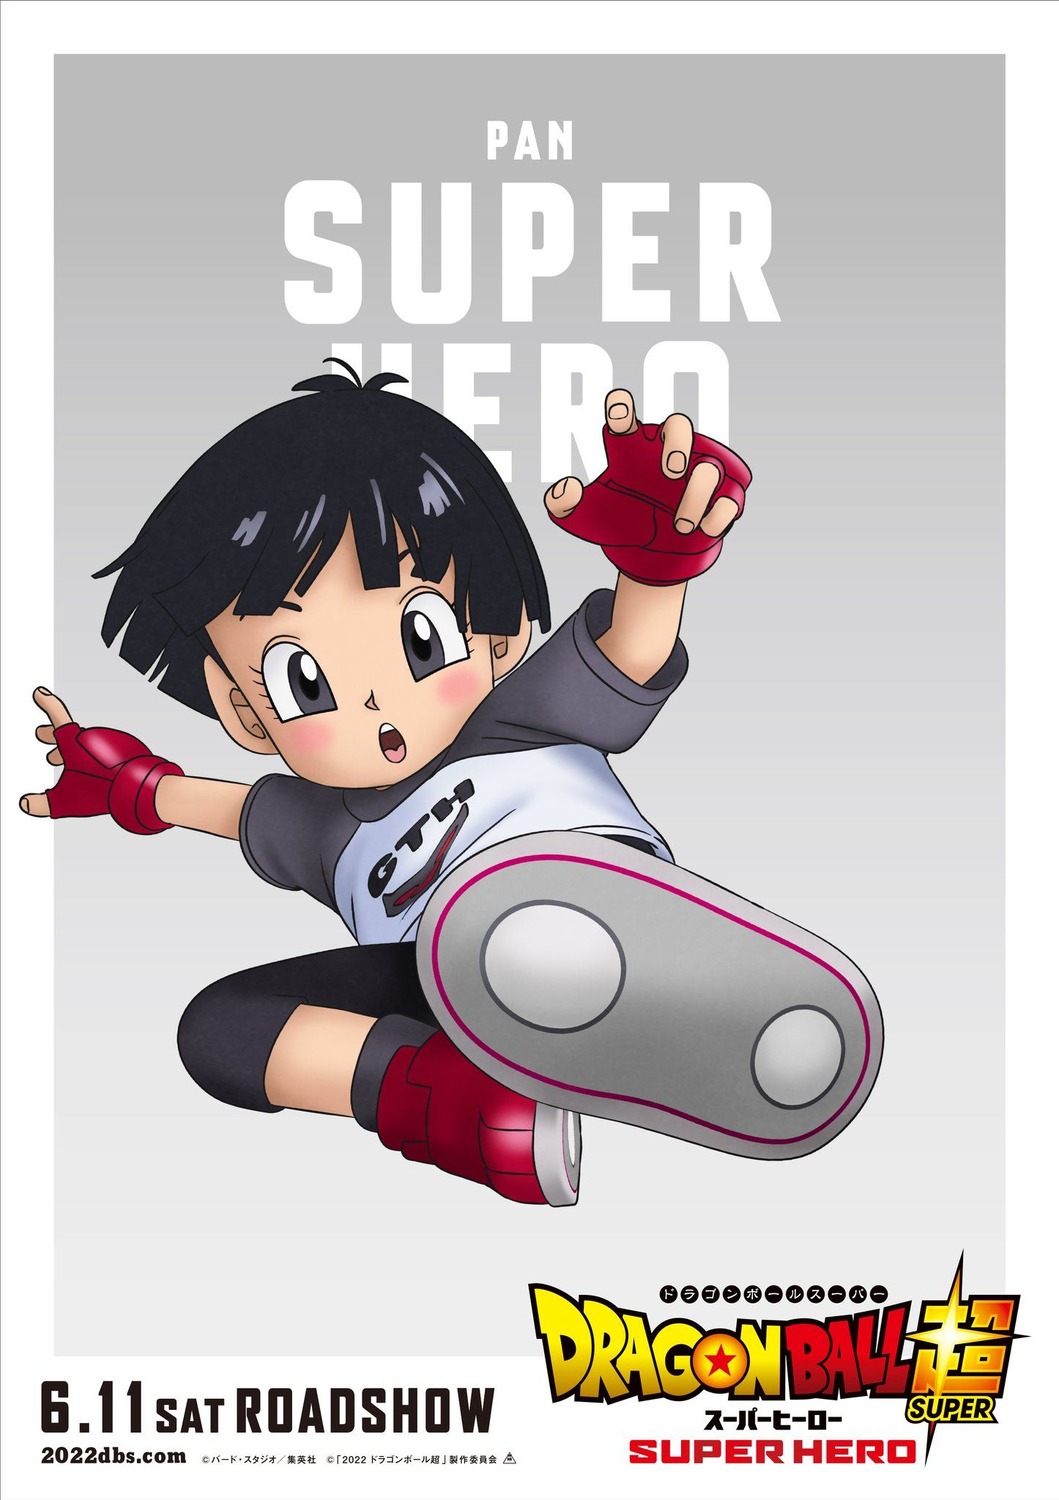 Extra Large Movie Poster Image for Doragon boru supa supa hiro (#8 of 11)